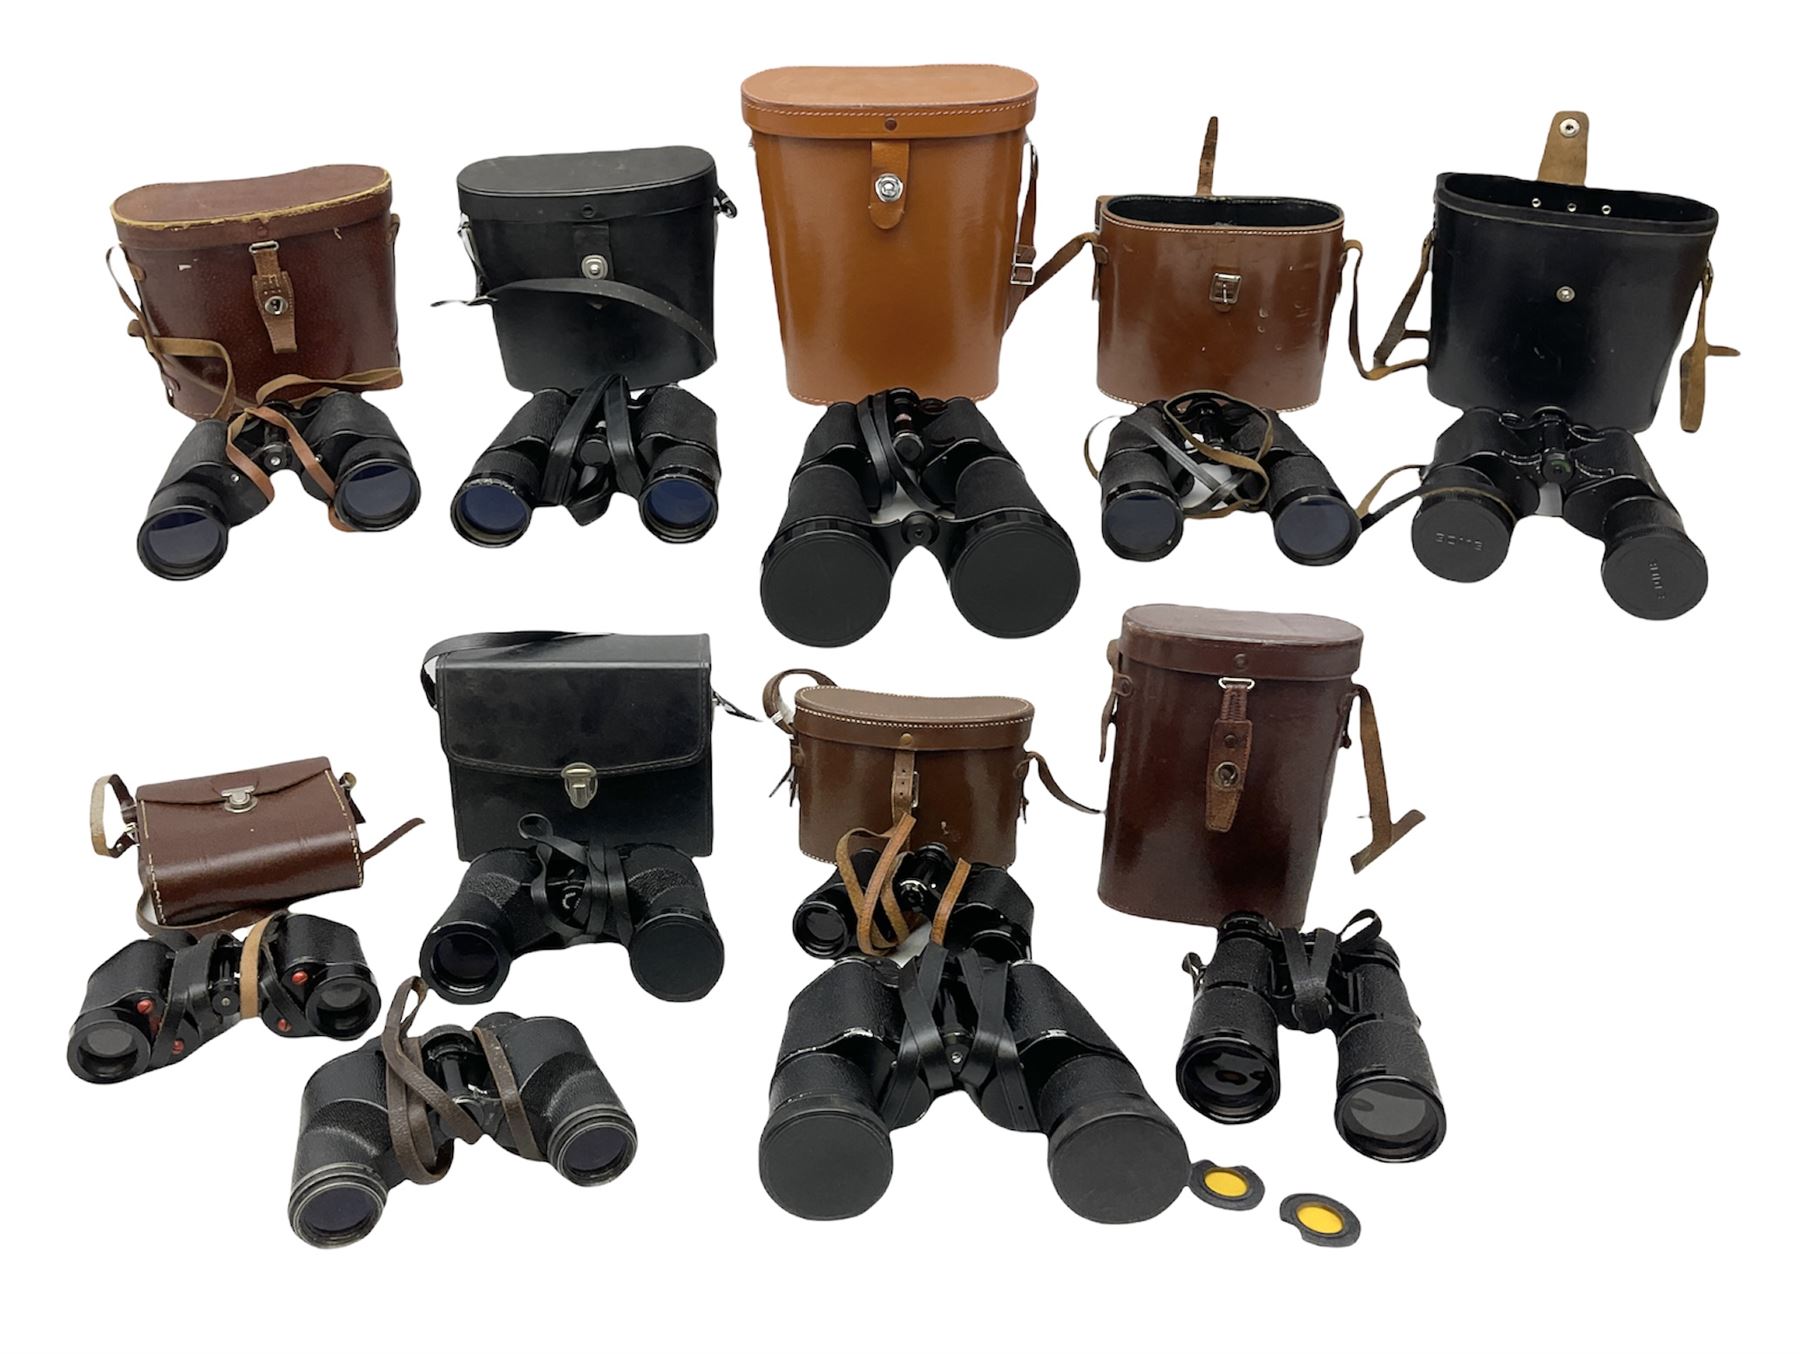 Eleven pairs of binoculars